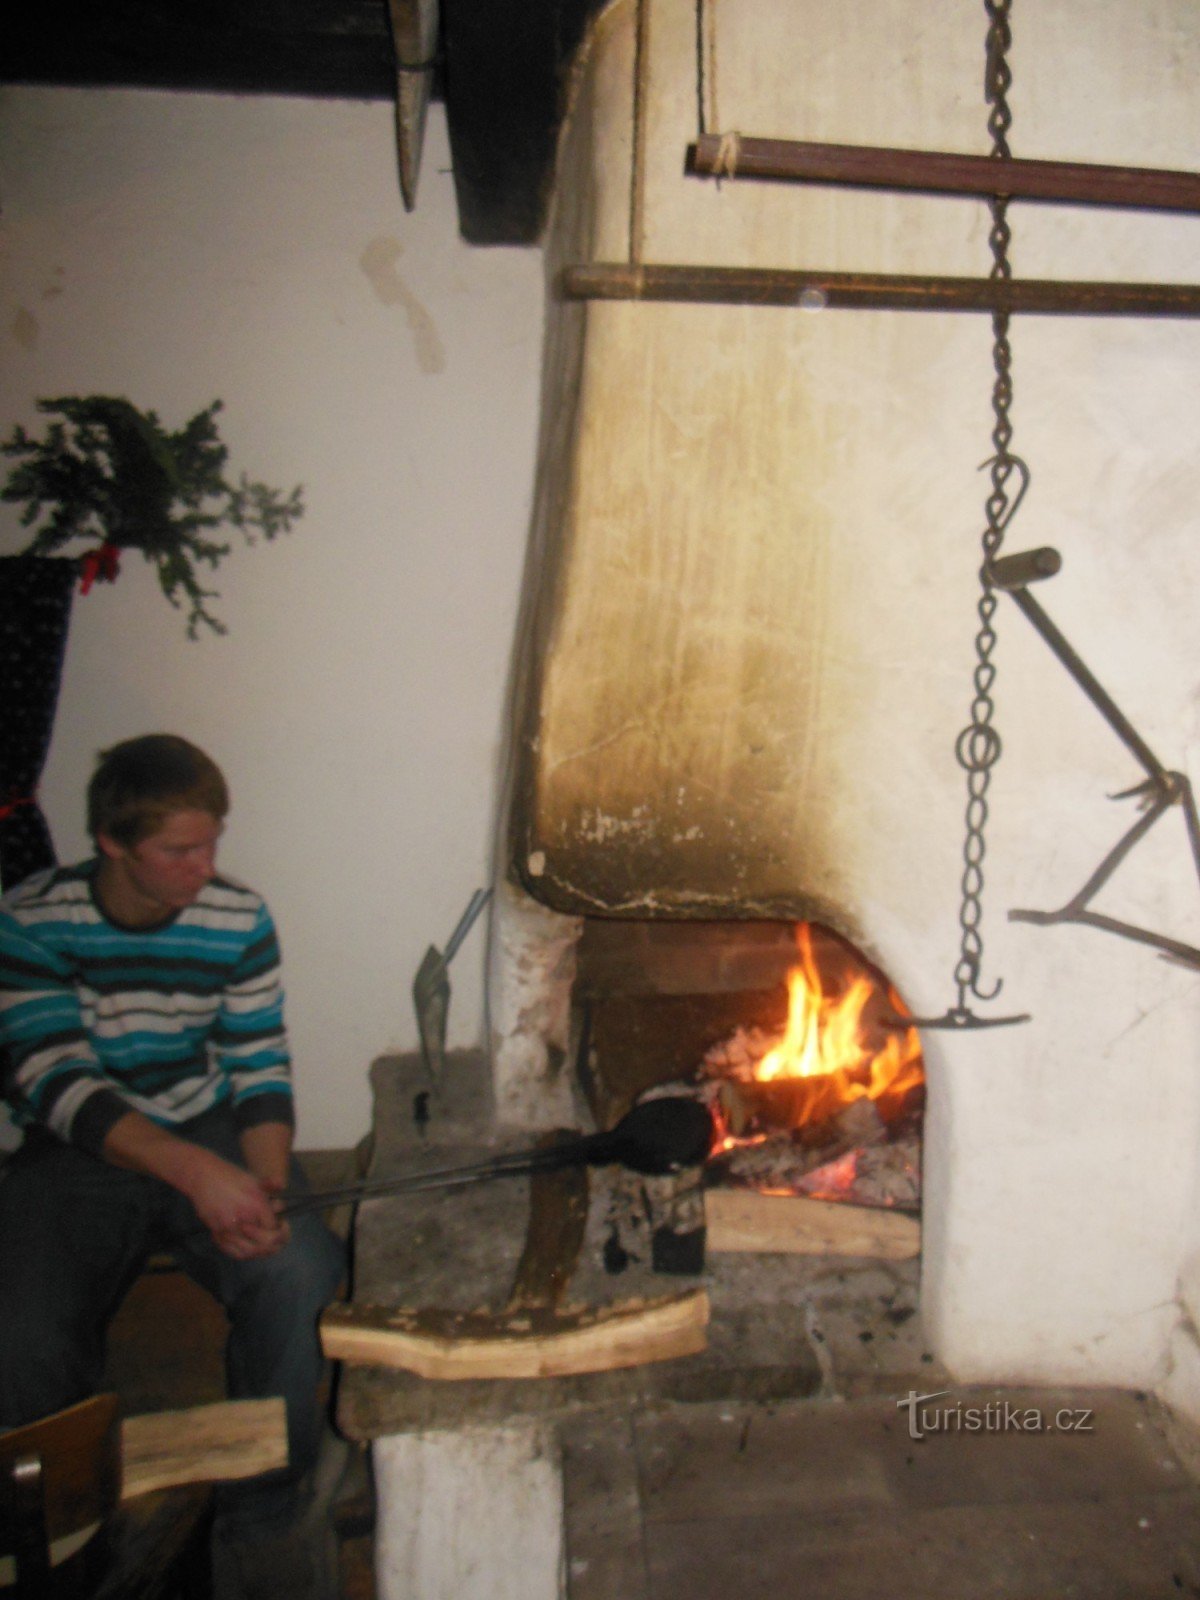 I wafer natalizi venivano cotti nella casa di legno Kosenka